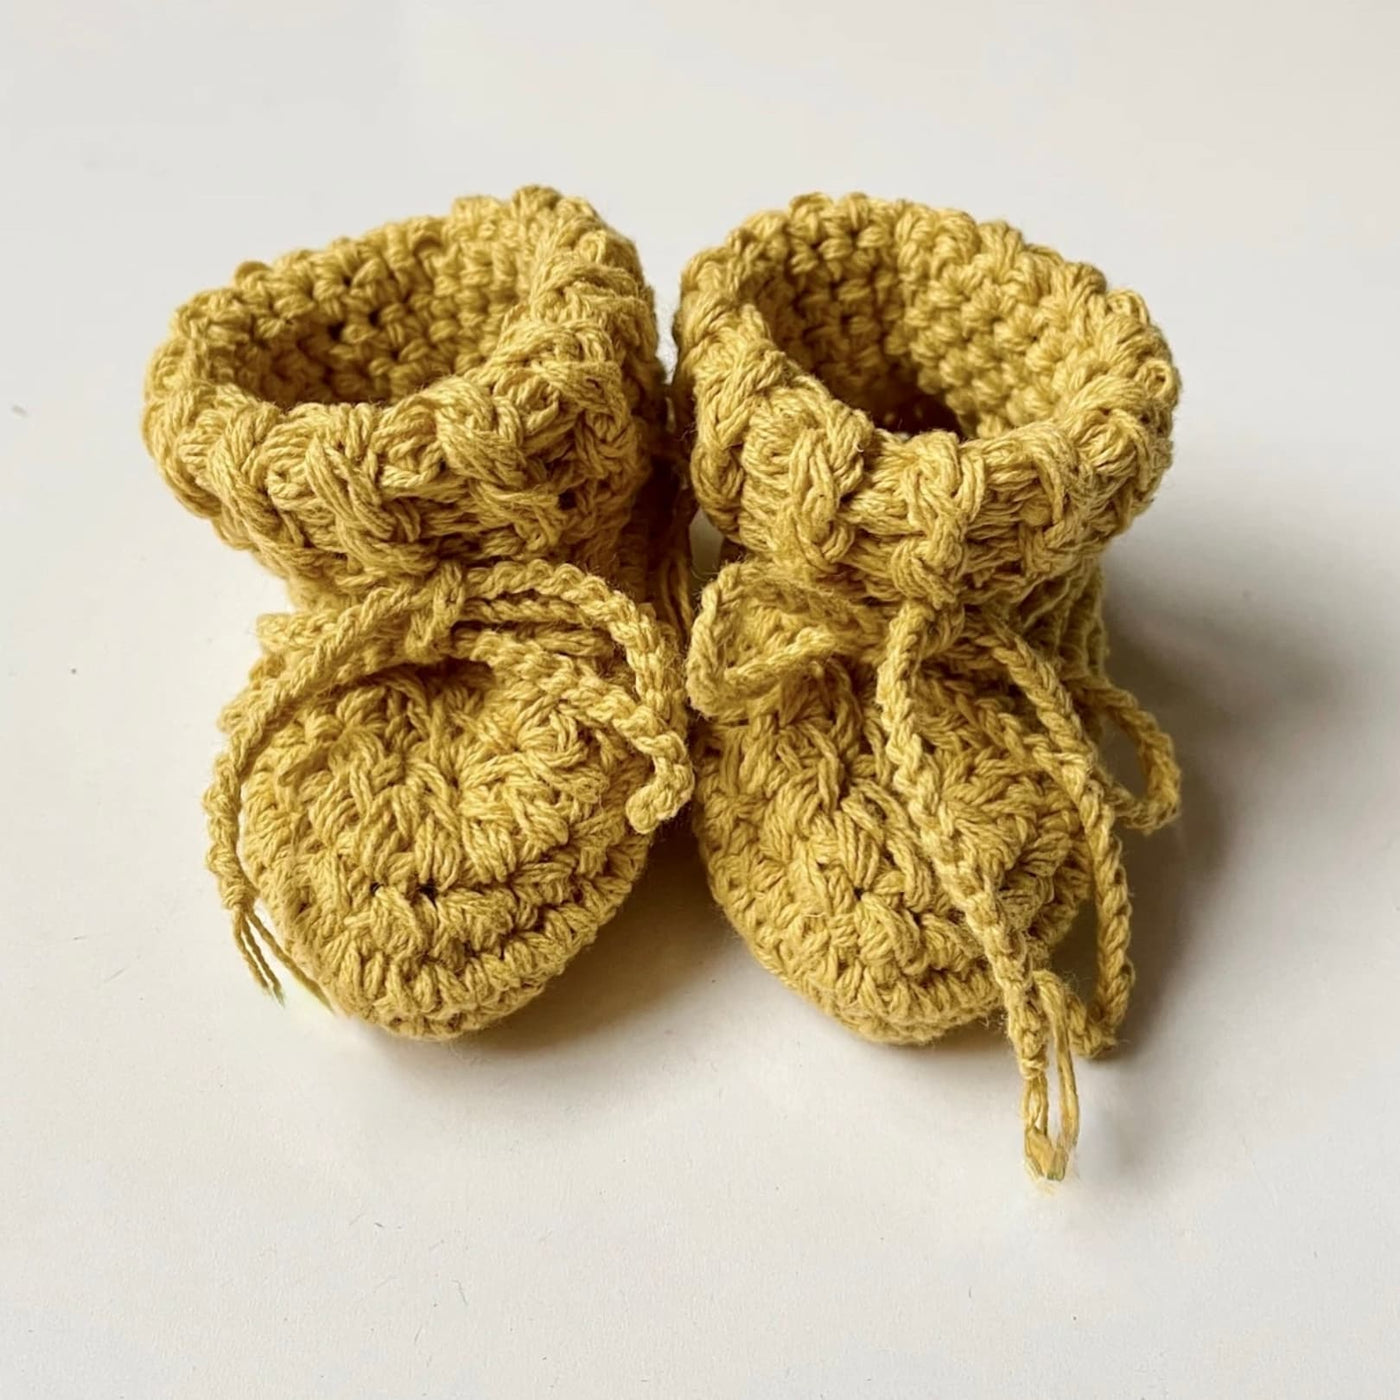 Hand crocheted organic cotton baby botties in sunshine gold.